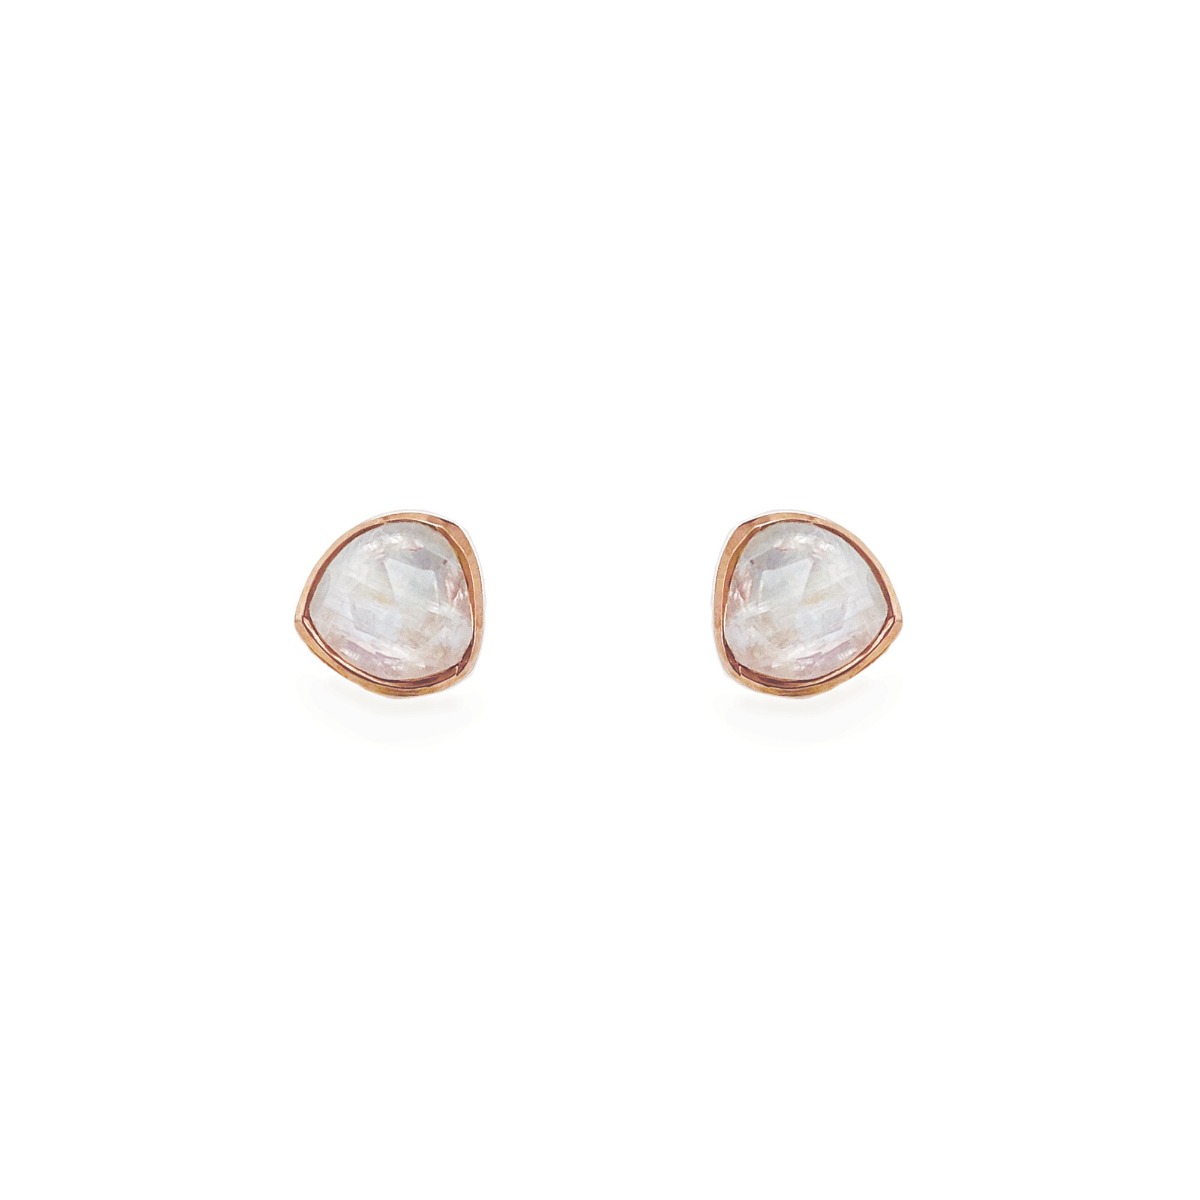 Sarah Alexander Echo Moonstone Irregular Stud Earrings